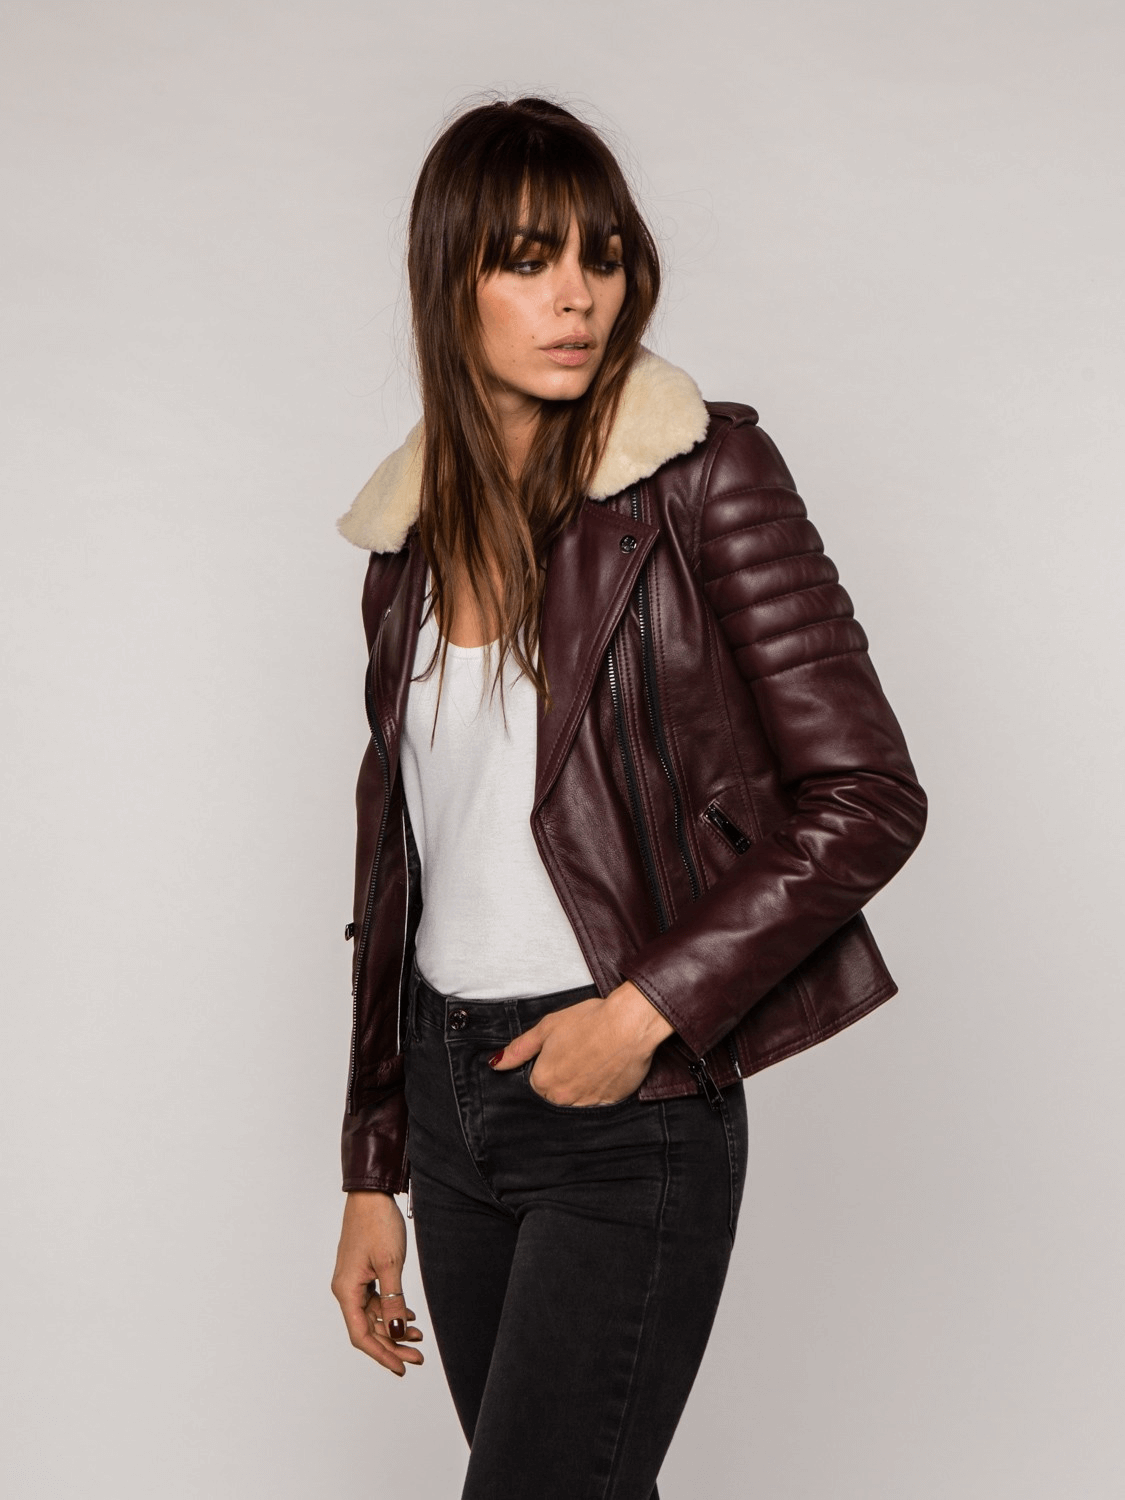 Burgundy Fur Collared Leather Jacket